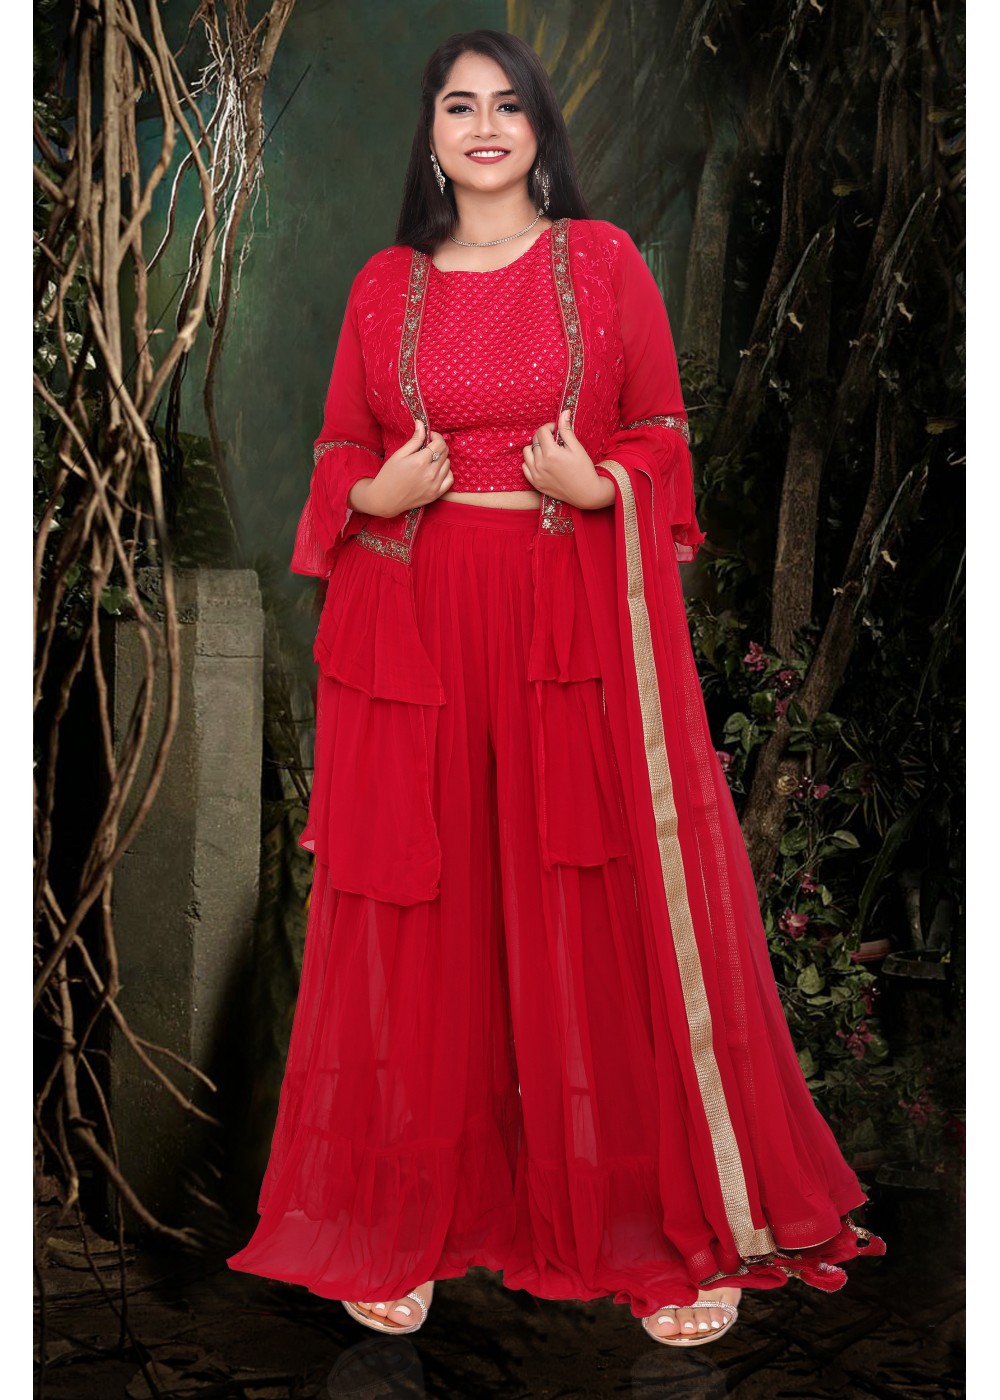 sharara suits for women red sharara wedding outfit punjabi suit salwar  kameez | eBay